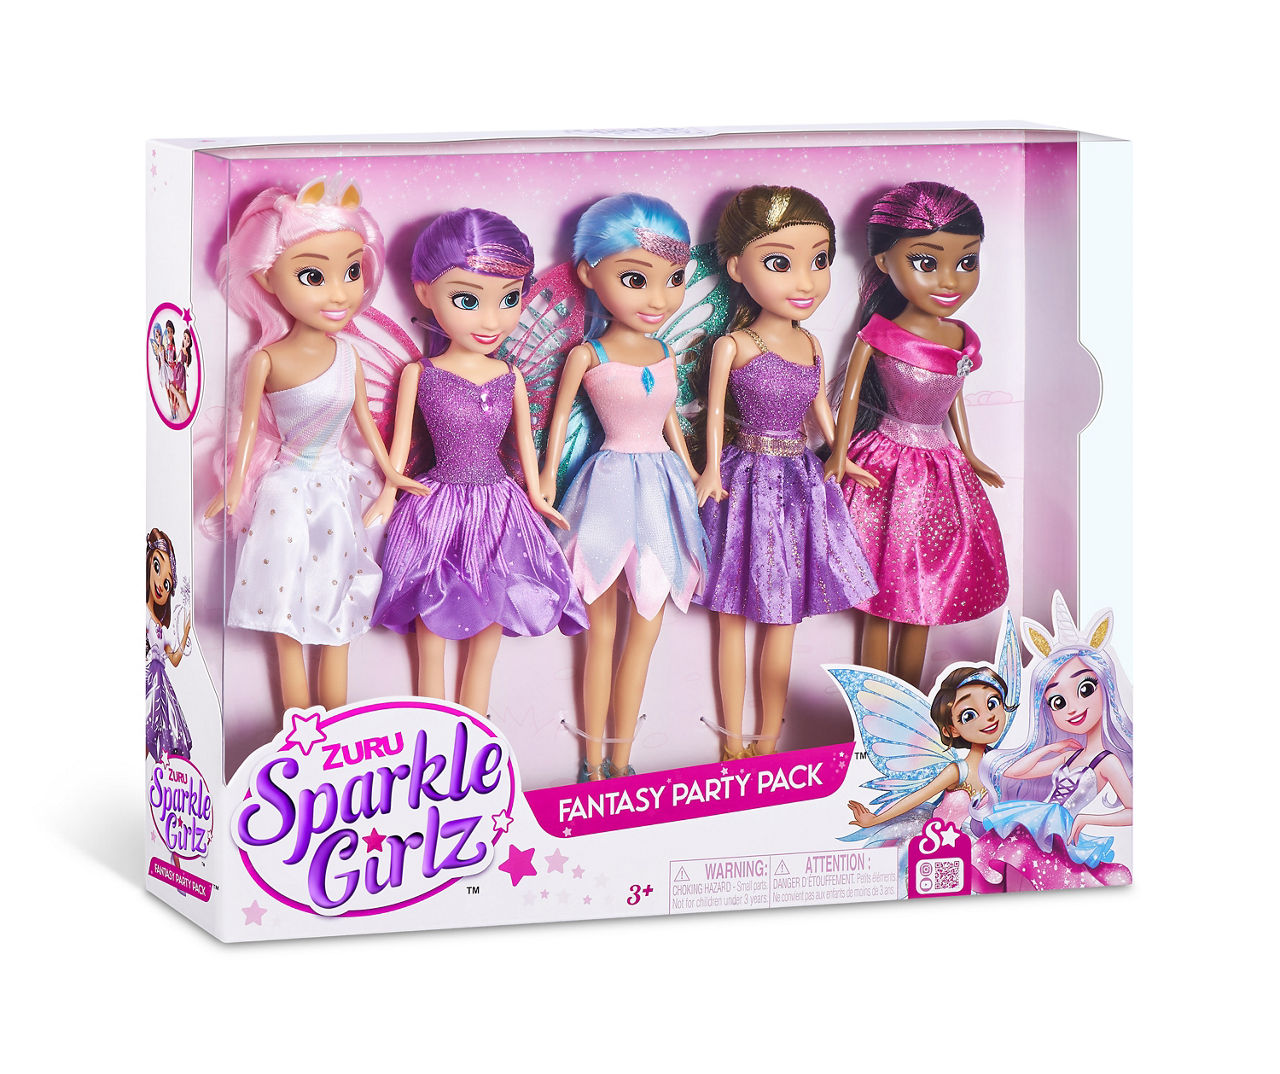 SPARKLE GIRLZ Fantasy Party Pack 5-Piece Doll Set